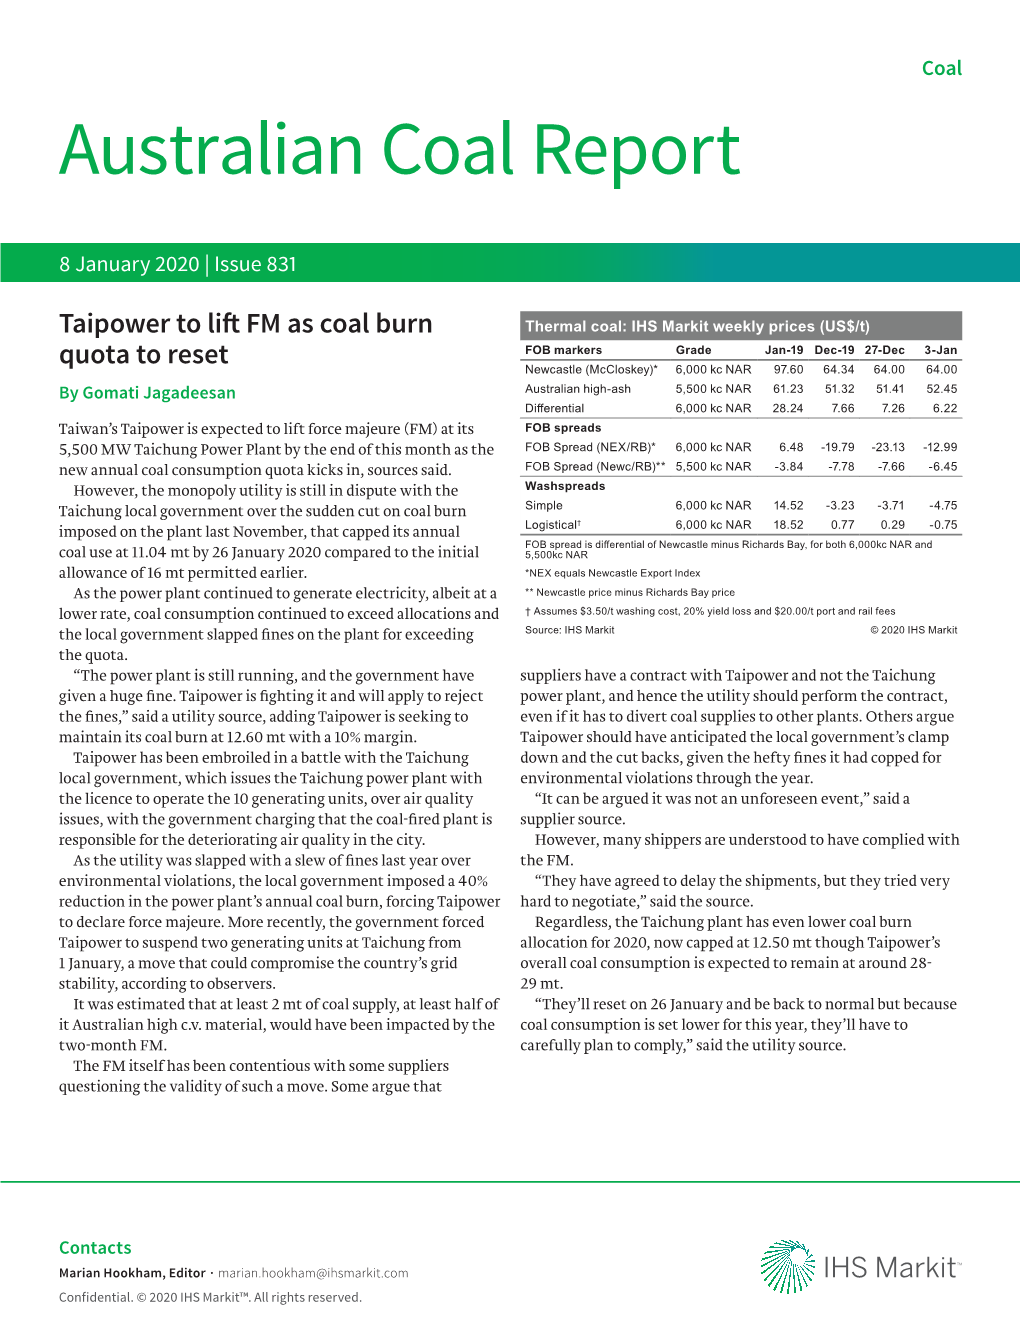 Australian Coal Report